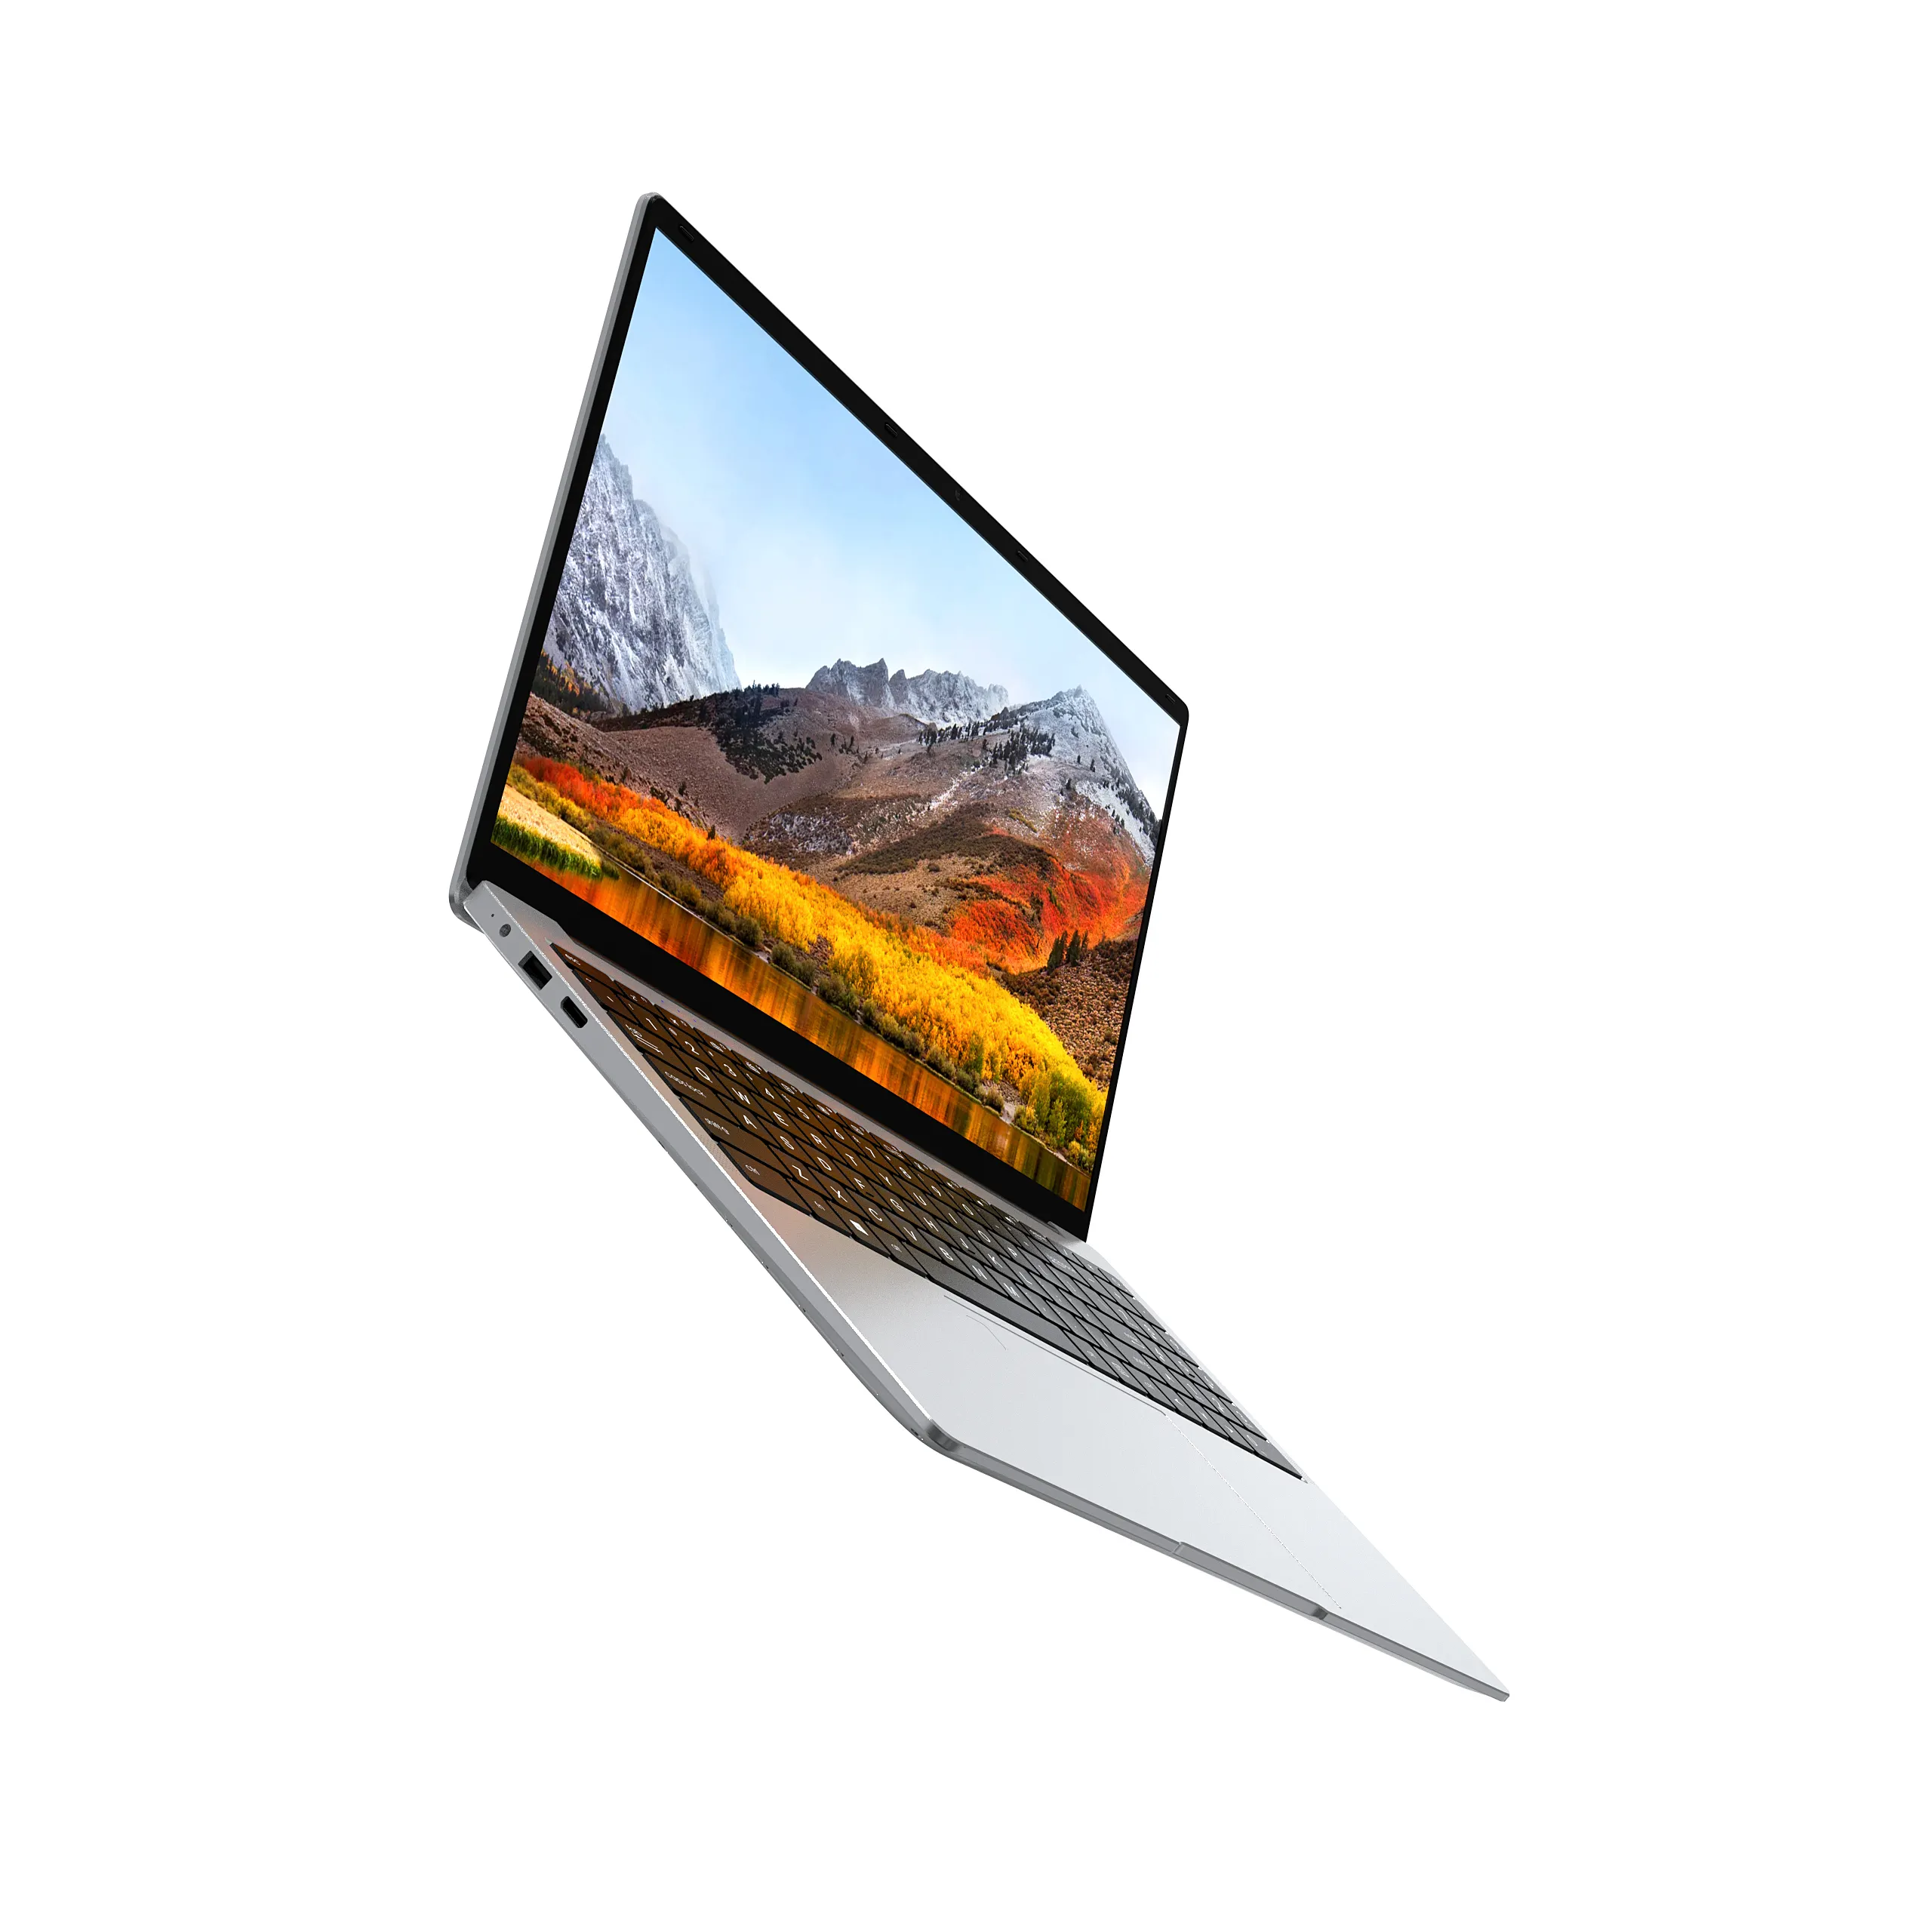 AIWO Novo Barato Laptop 15,6 polegadas N5095 4500 Mah Battery Laptops para venda baratos em ofertas 8 Gb Ram Laptop Sob $300 $350